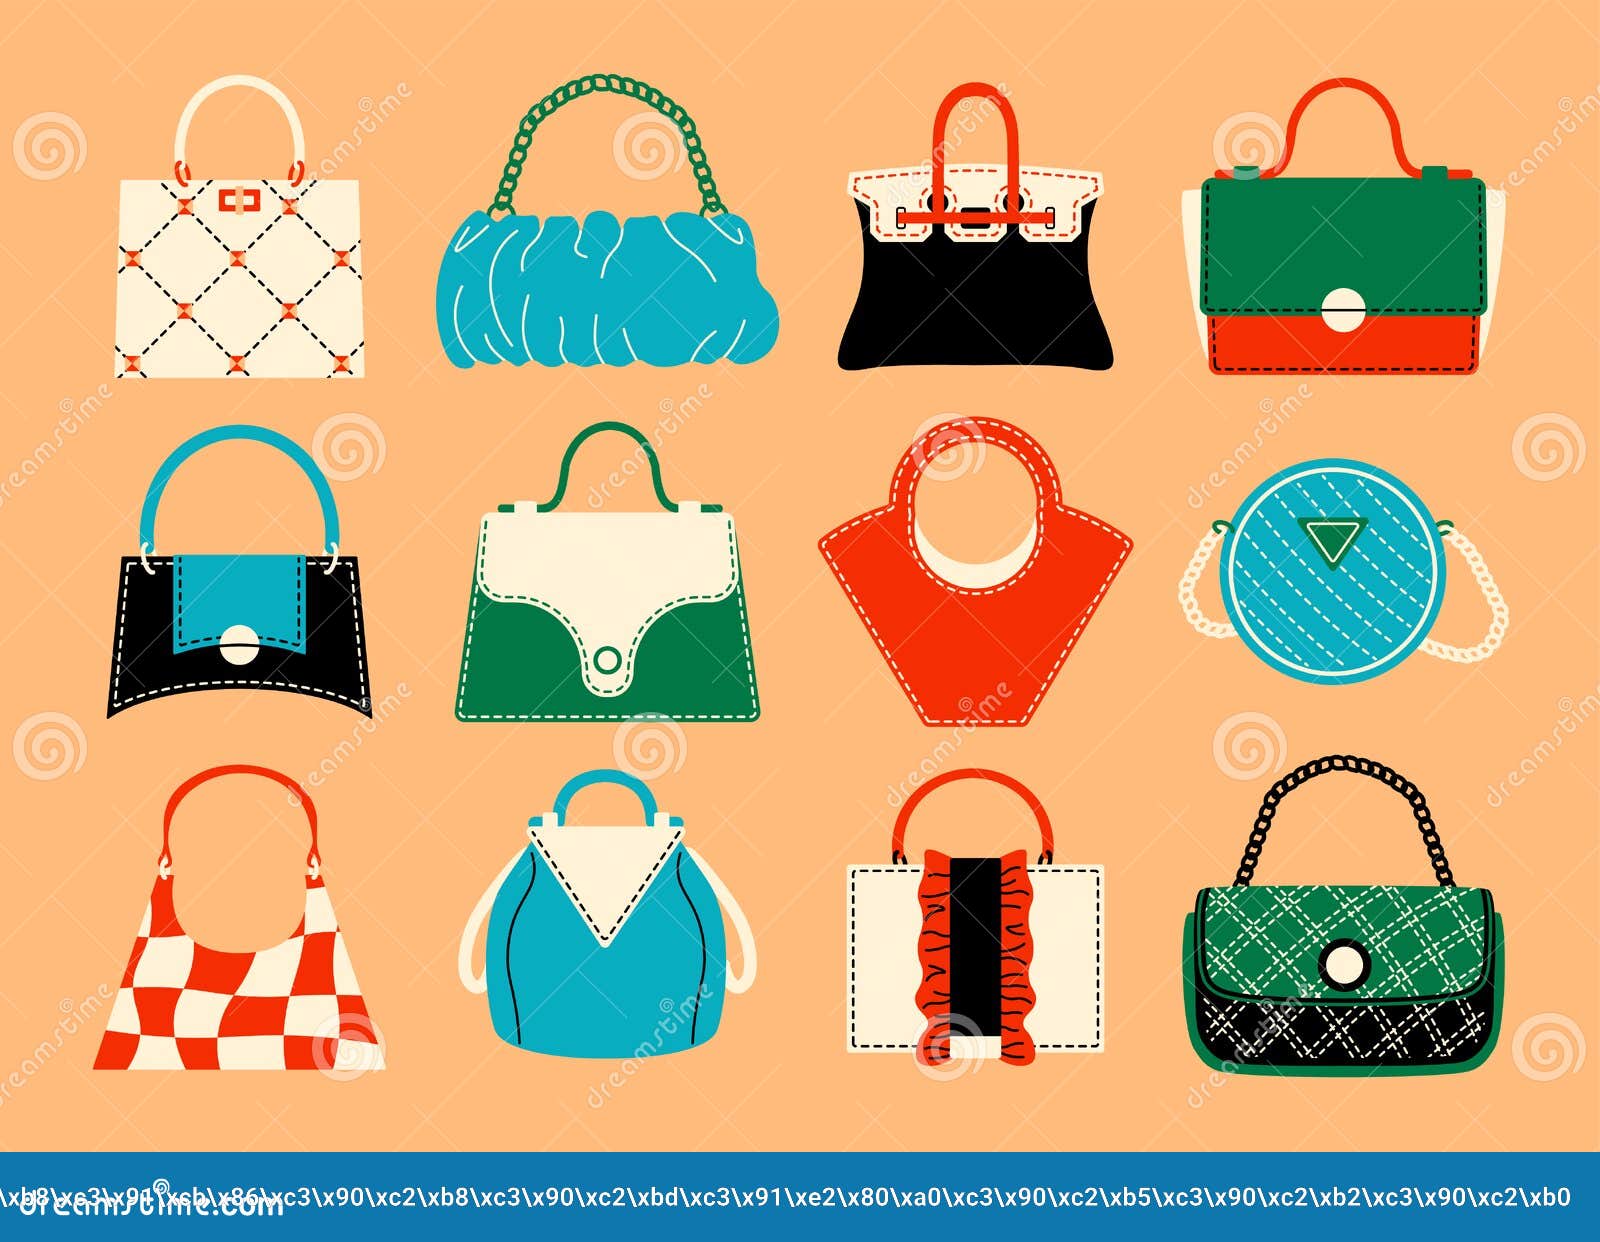 Designer Clutch Bags | COCOON, Luxury Handbag Subscription